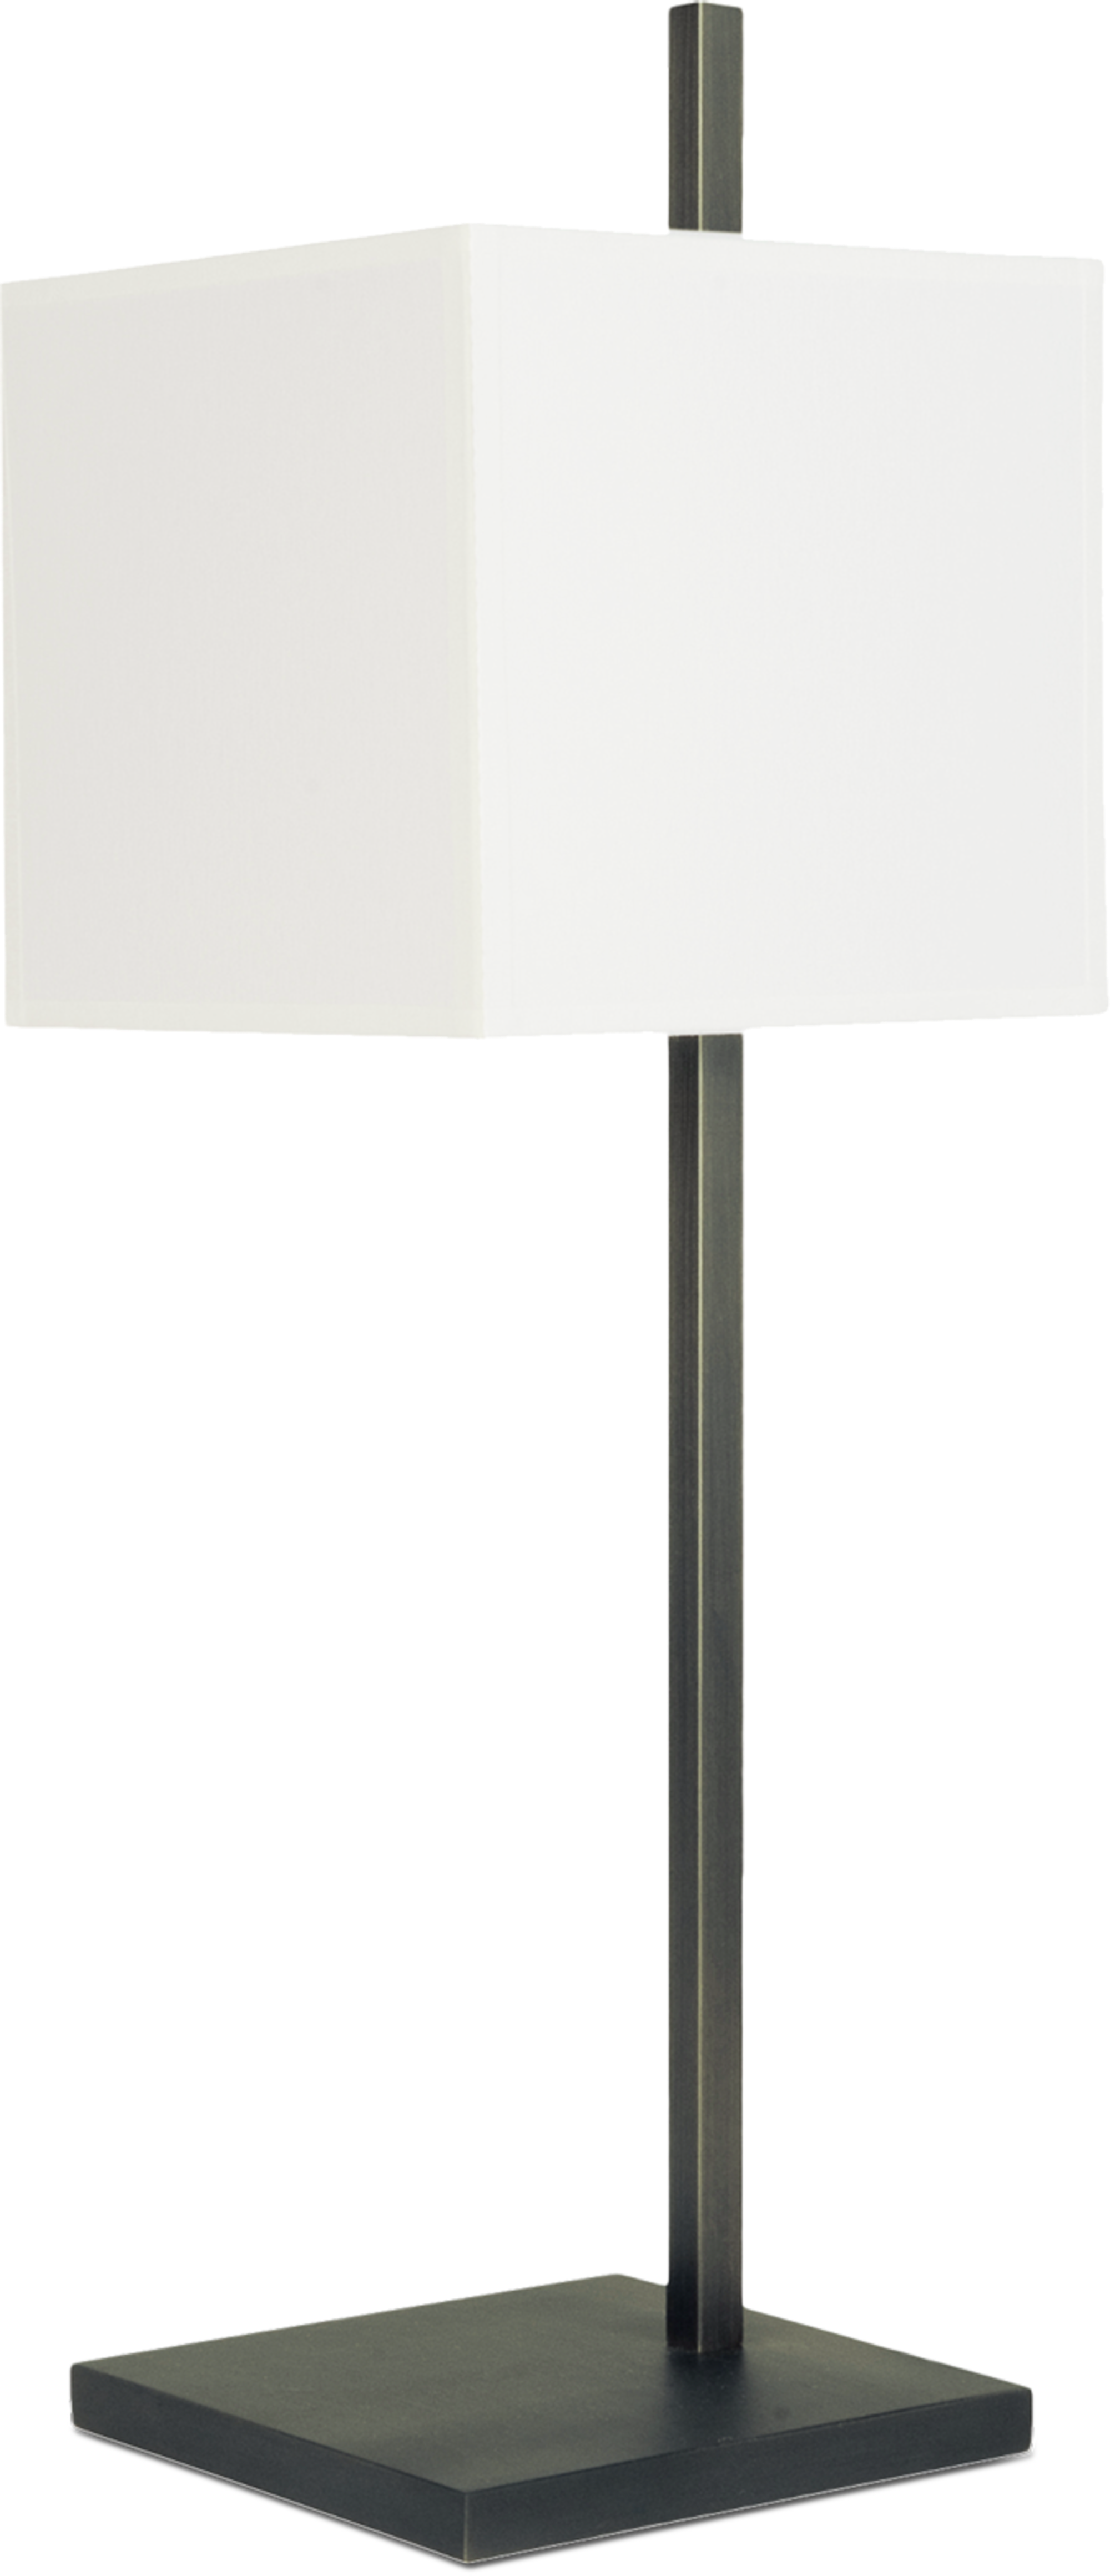 Faras table lamp